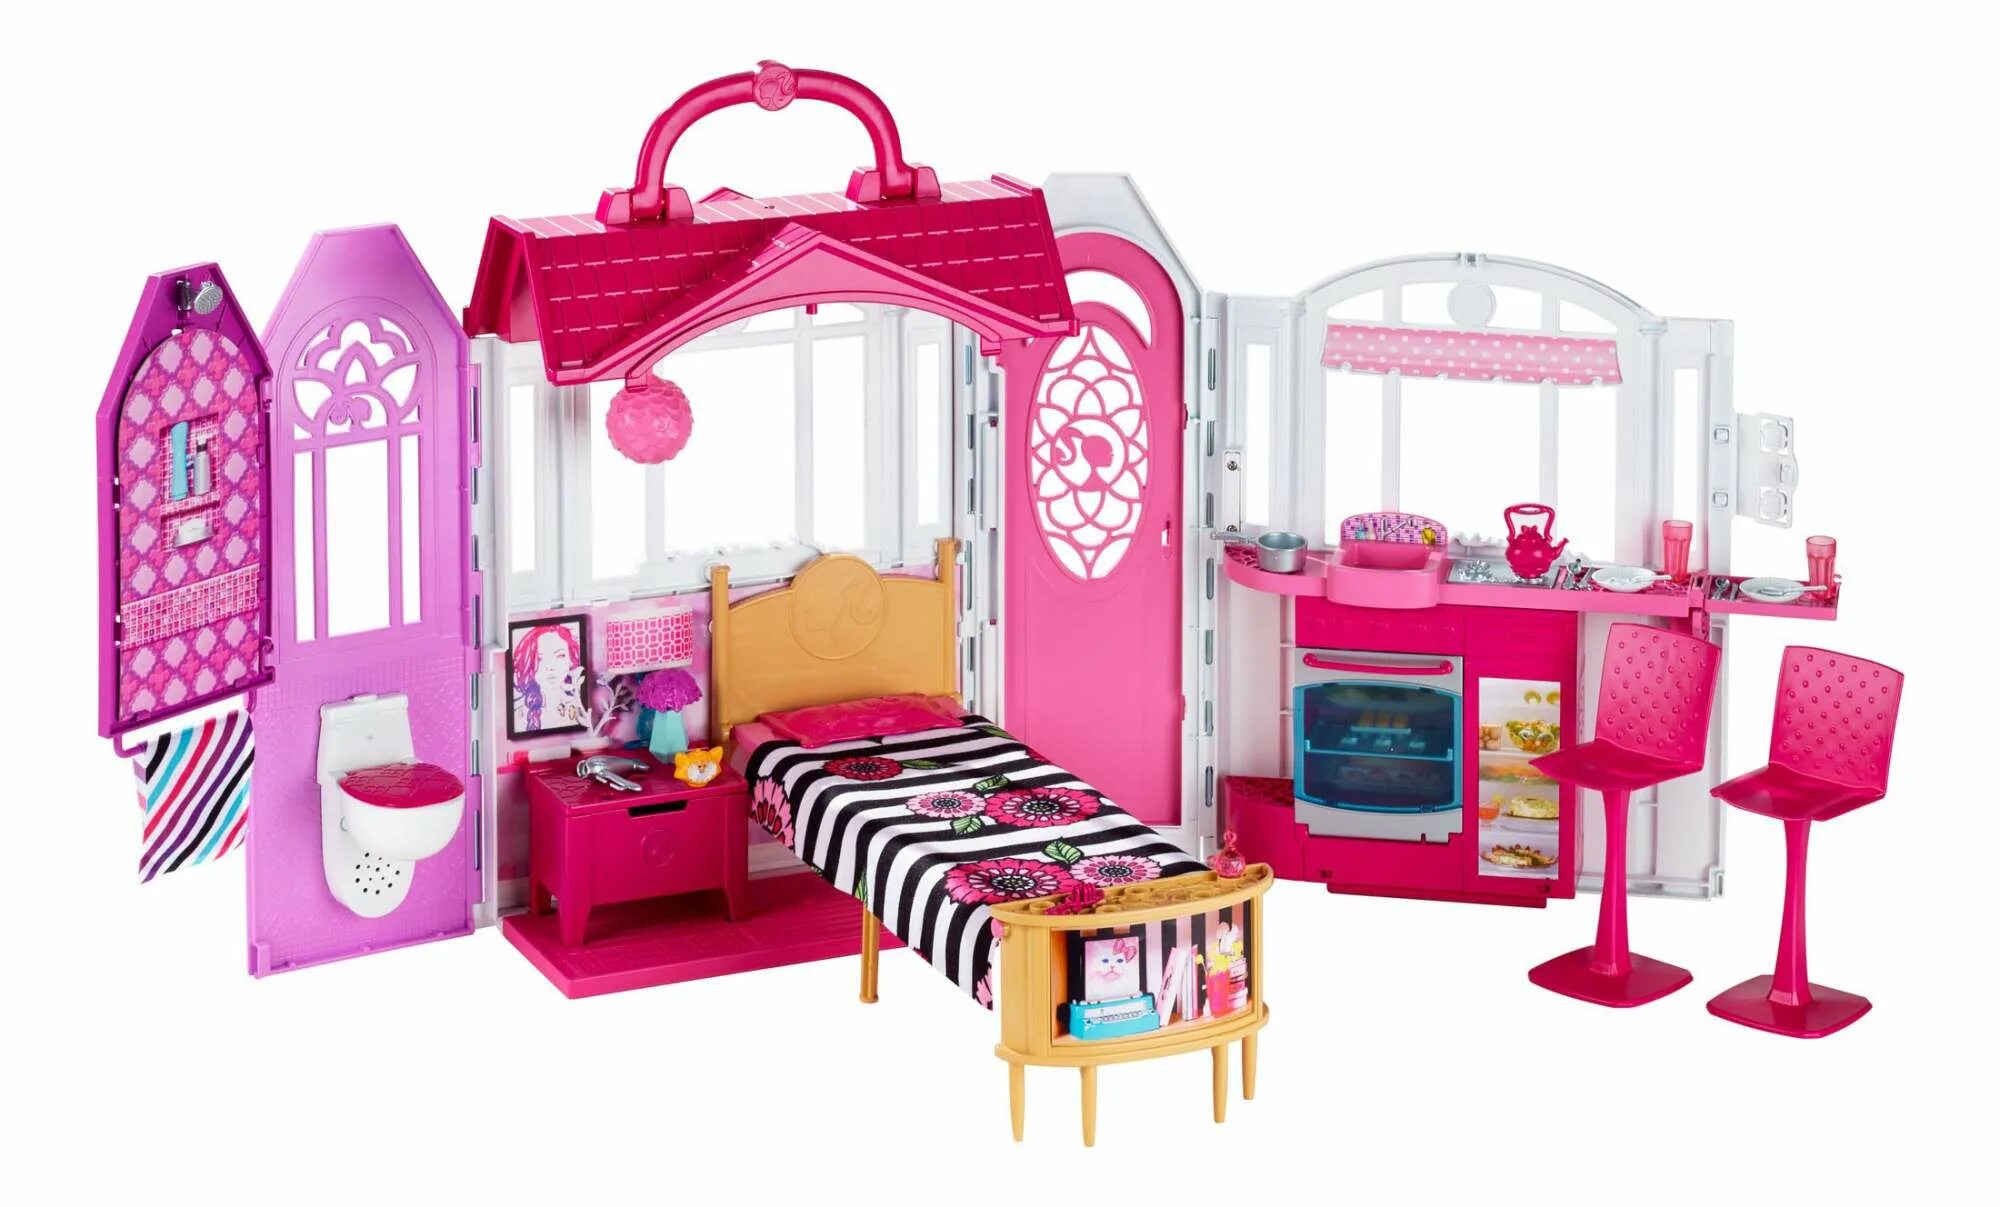 Домик для Барби. Домик для Барби одноэтажный. Складной домик для Барби. Новый домик Барби.